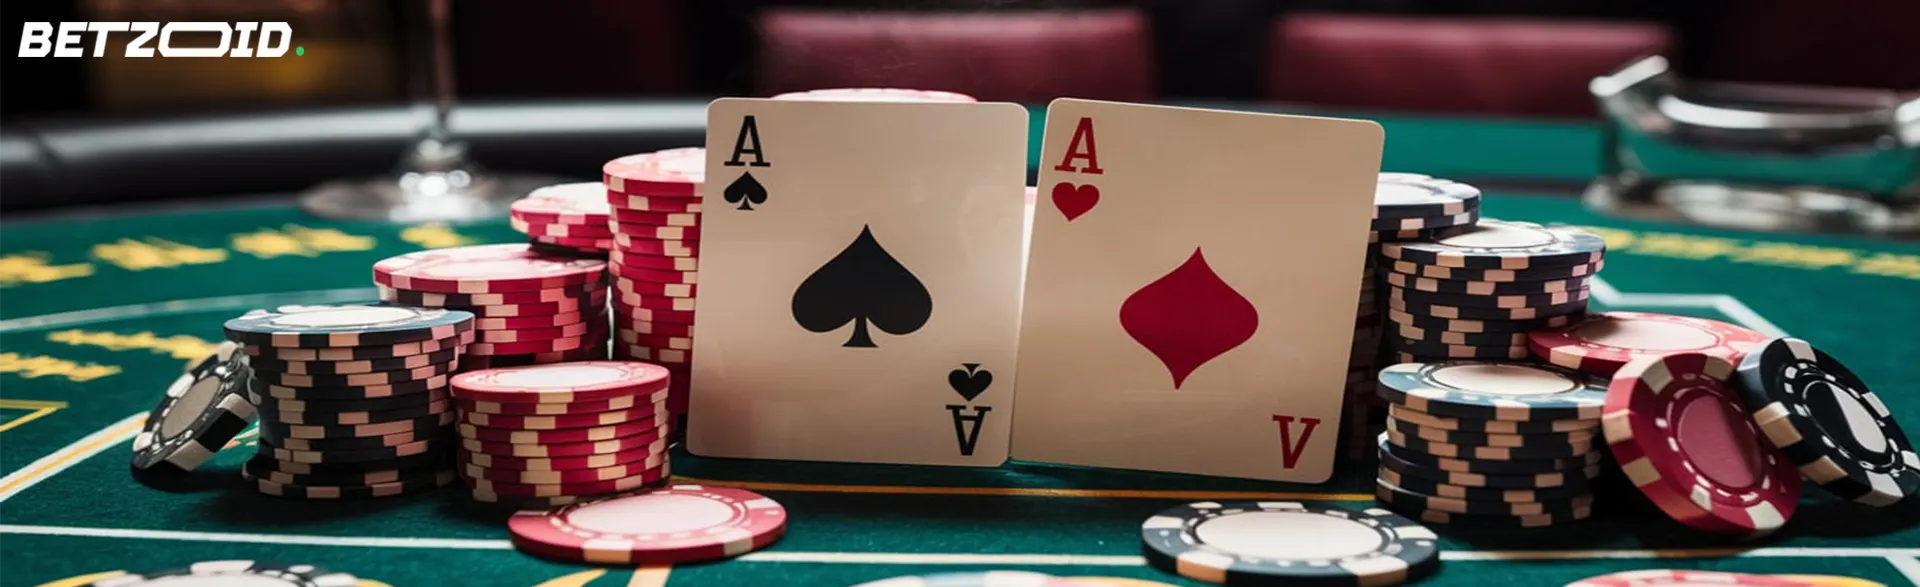 Online casinos Blackjack bonus casinos without deposit